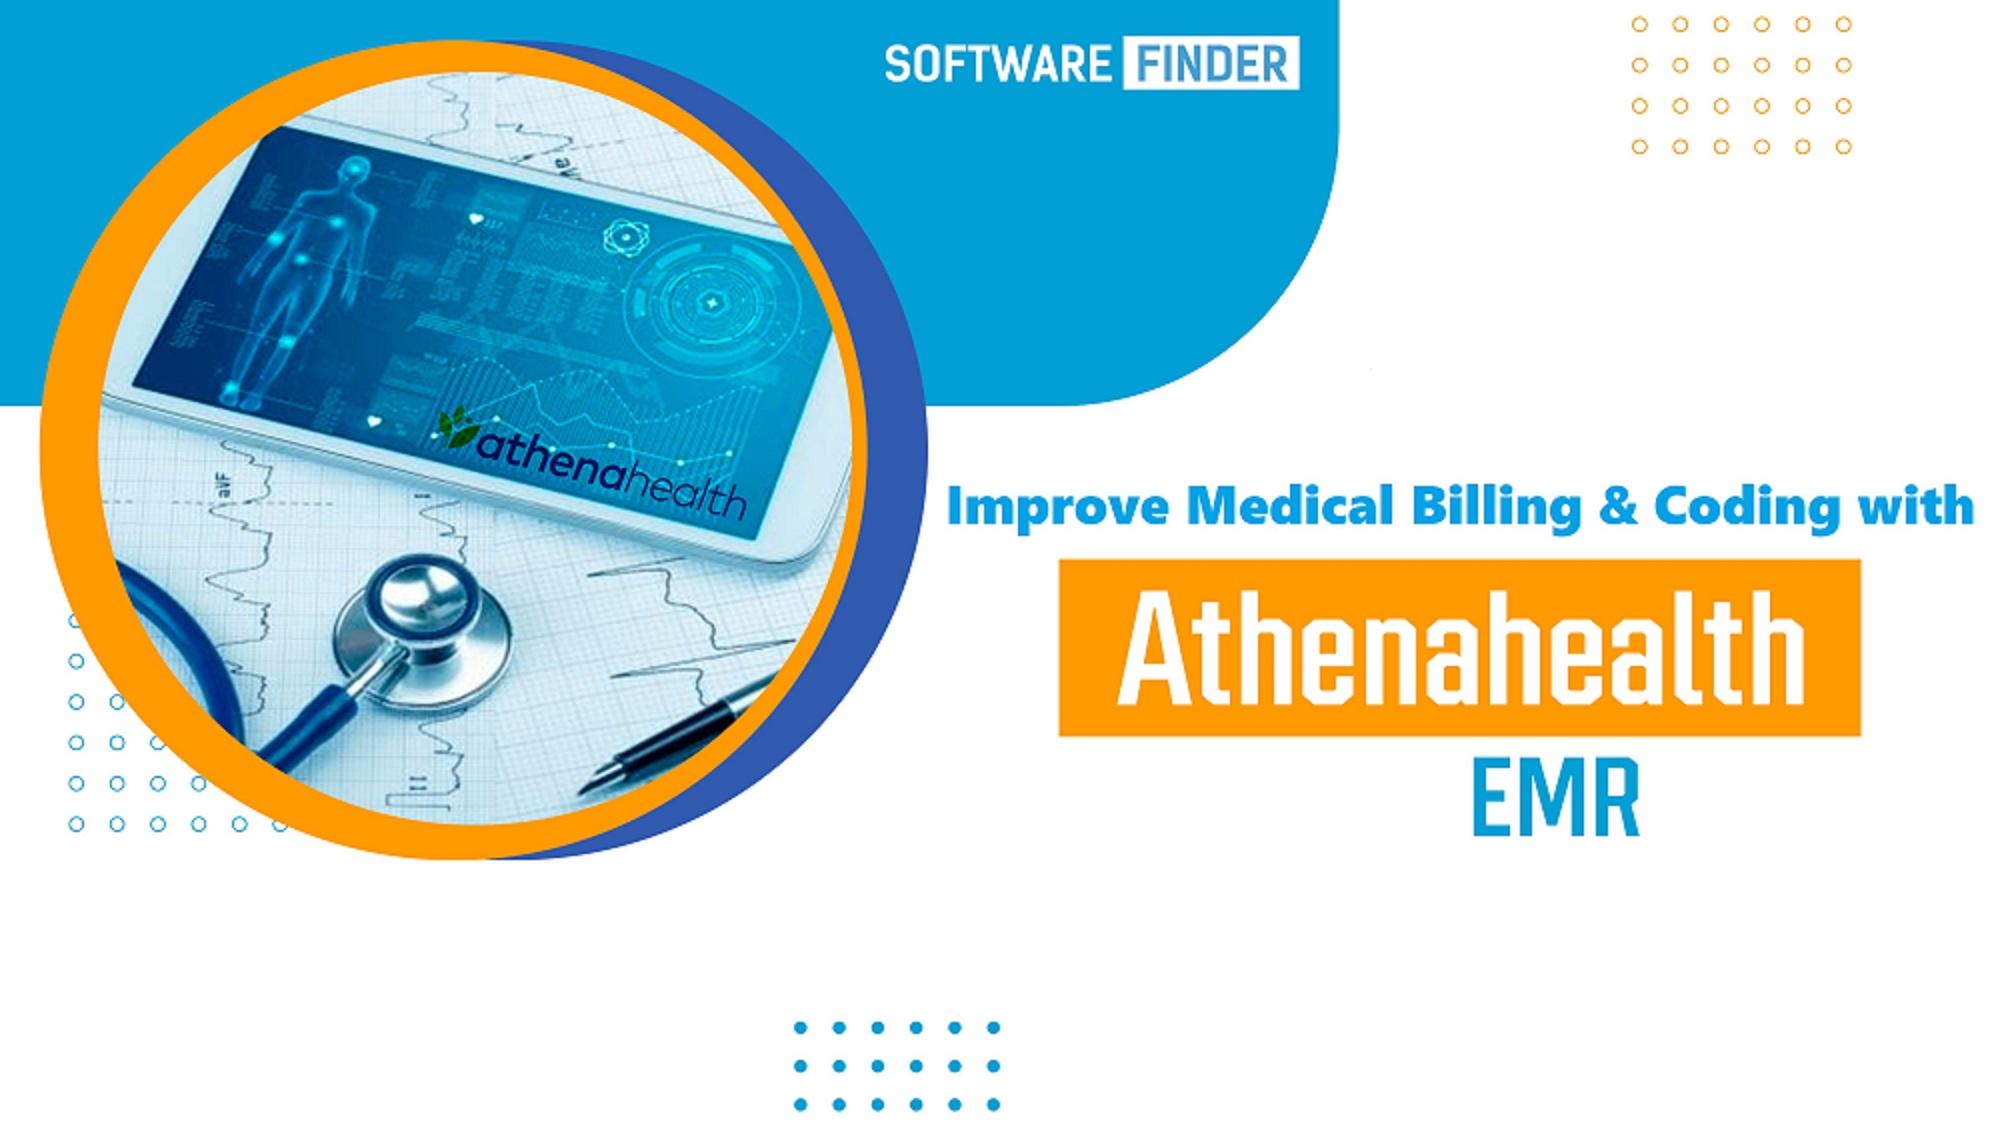 Improve Medical Billing & Coding with athenahealth EMR